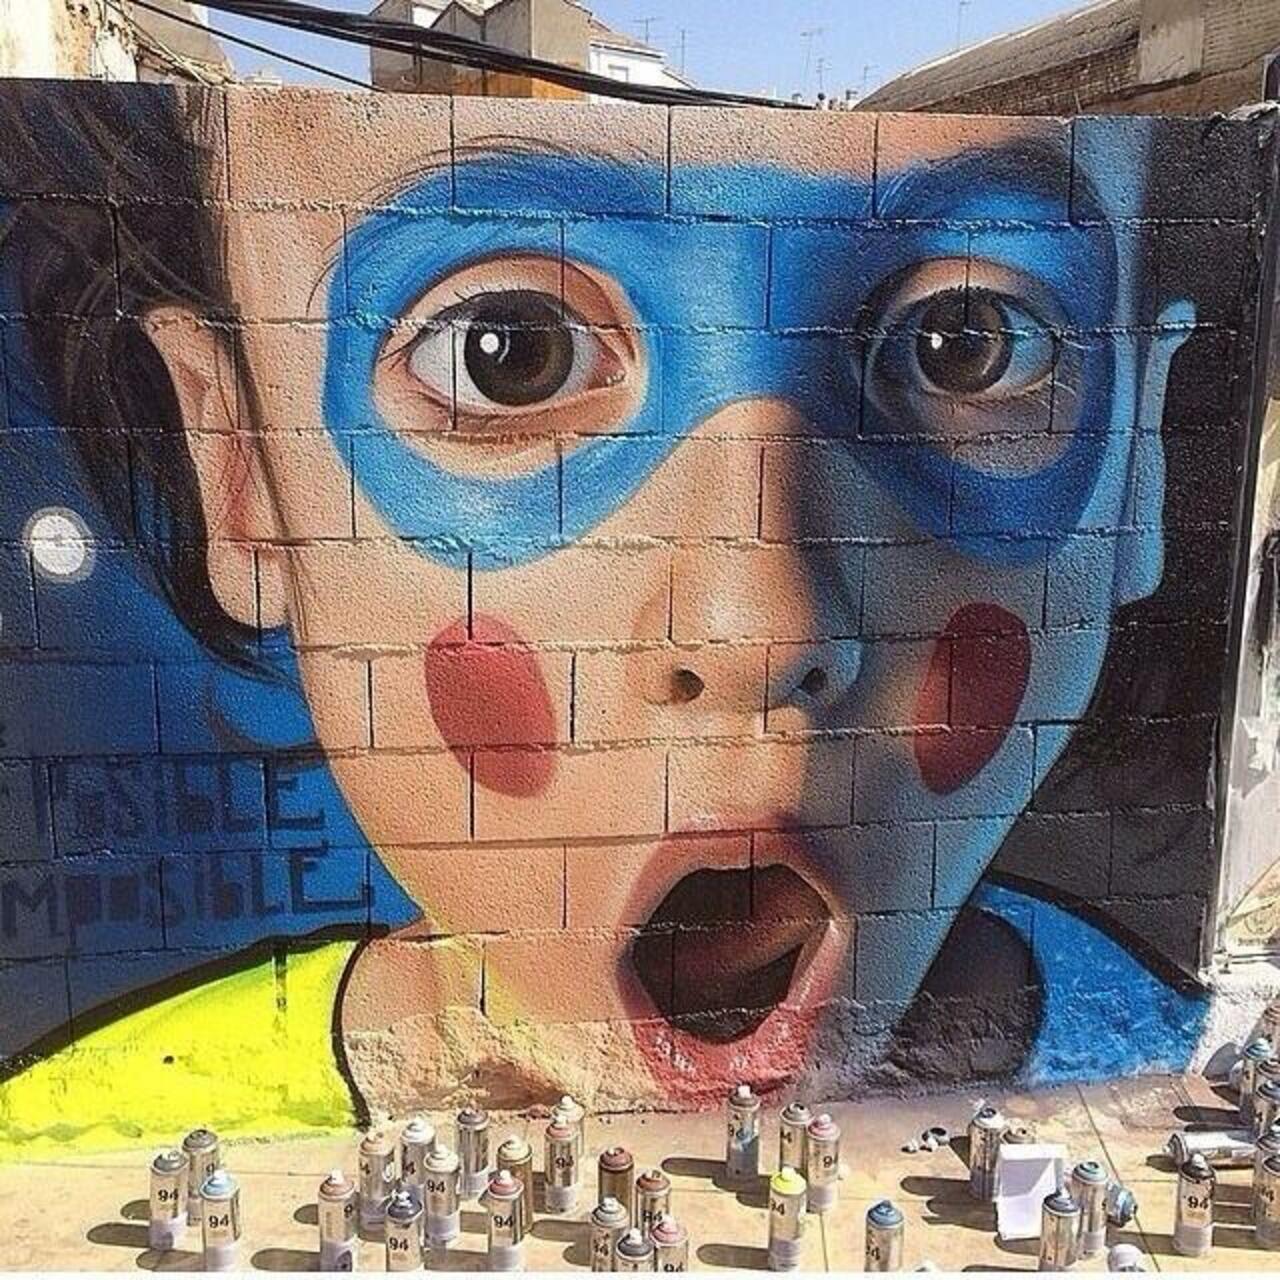 Artist @Belinwan unique Street Art portrait piece located in Linares, Spain #art #mural #graffiti #streetart https://t.co/6epDZ6qXwM